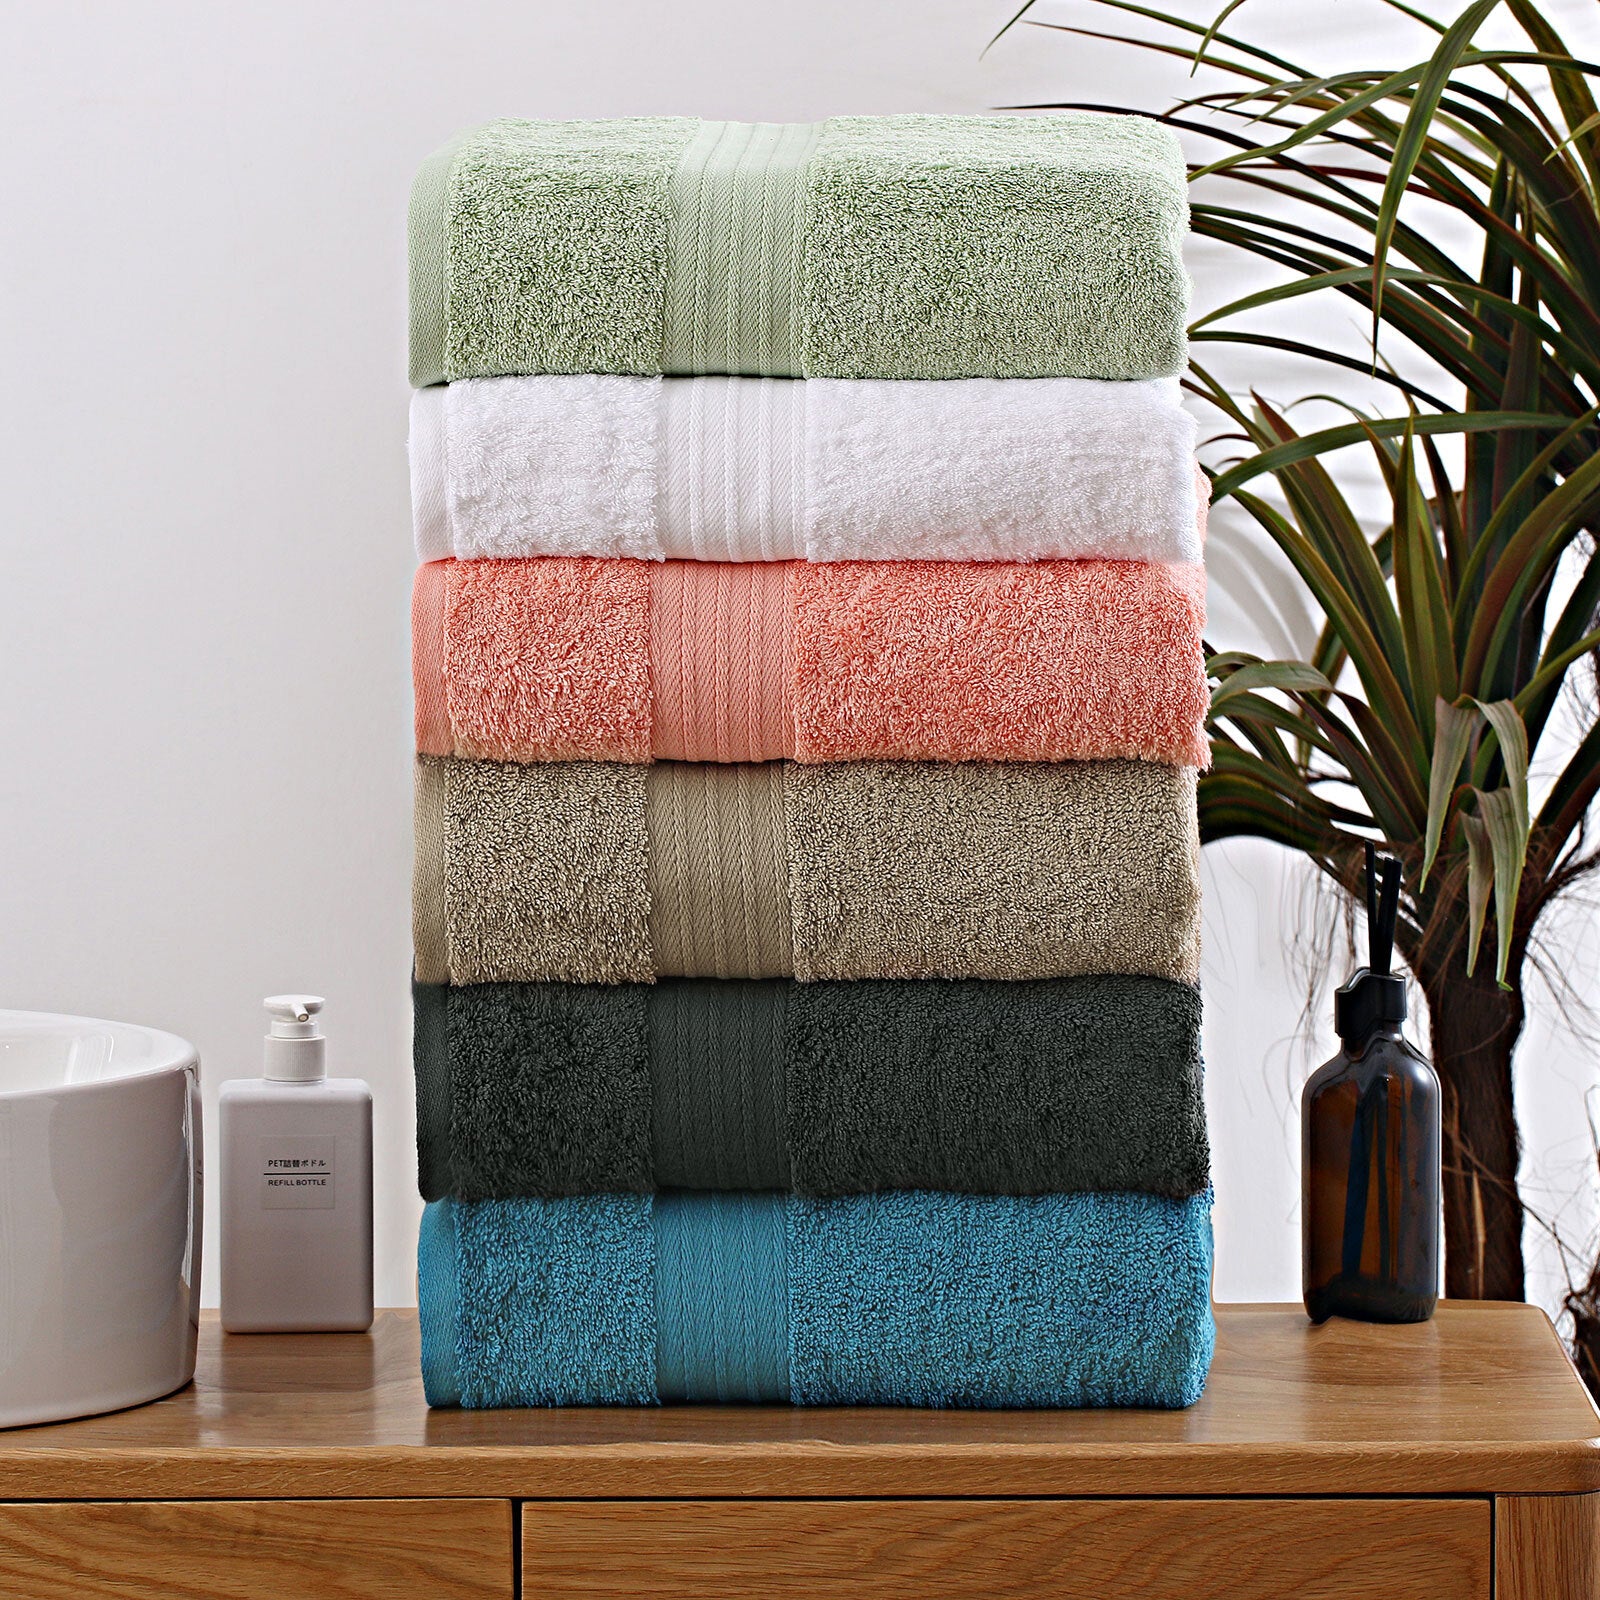 Linenland Extra Large Bath Sheet Towel 89 x 178cm - Coral - BM House & Garden